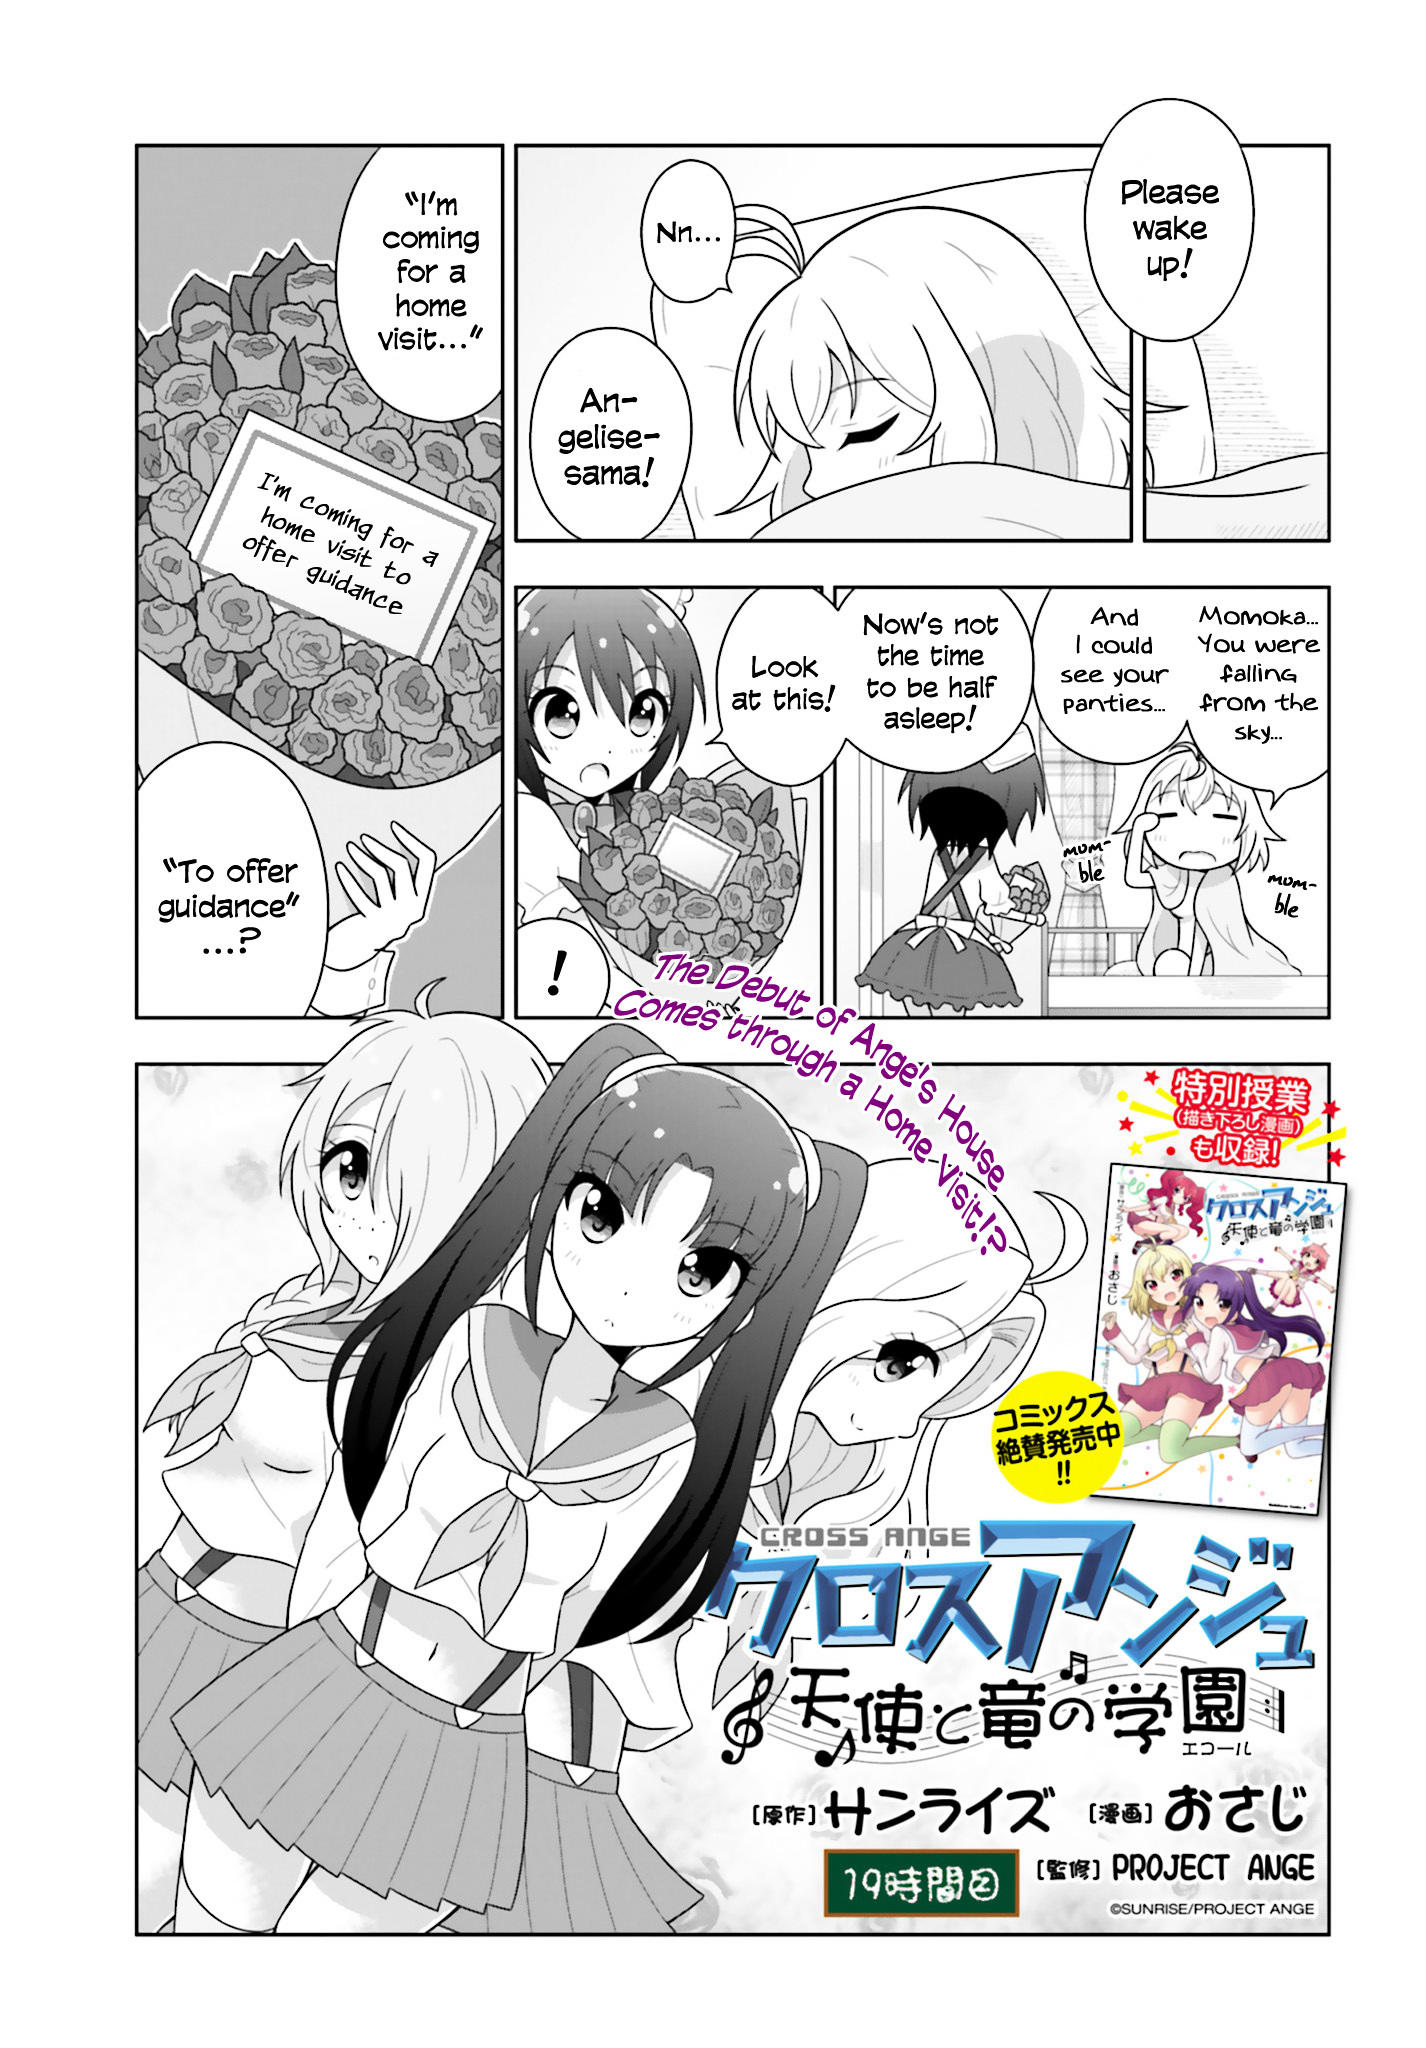 Read Cross Ange - Tenshi To Ryuu No Gakuen Chapter 2 on Mangakakalot